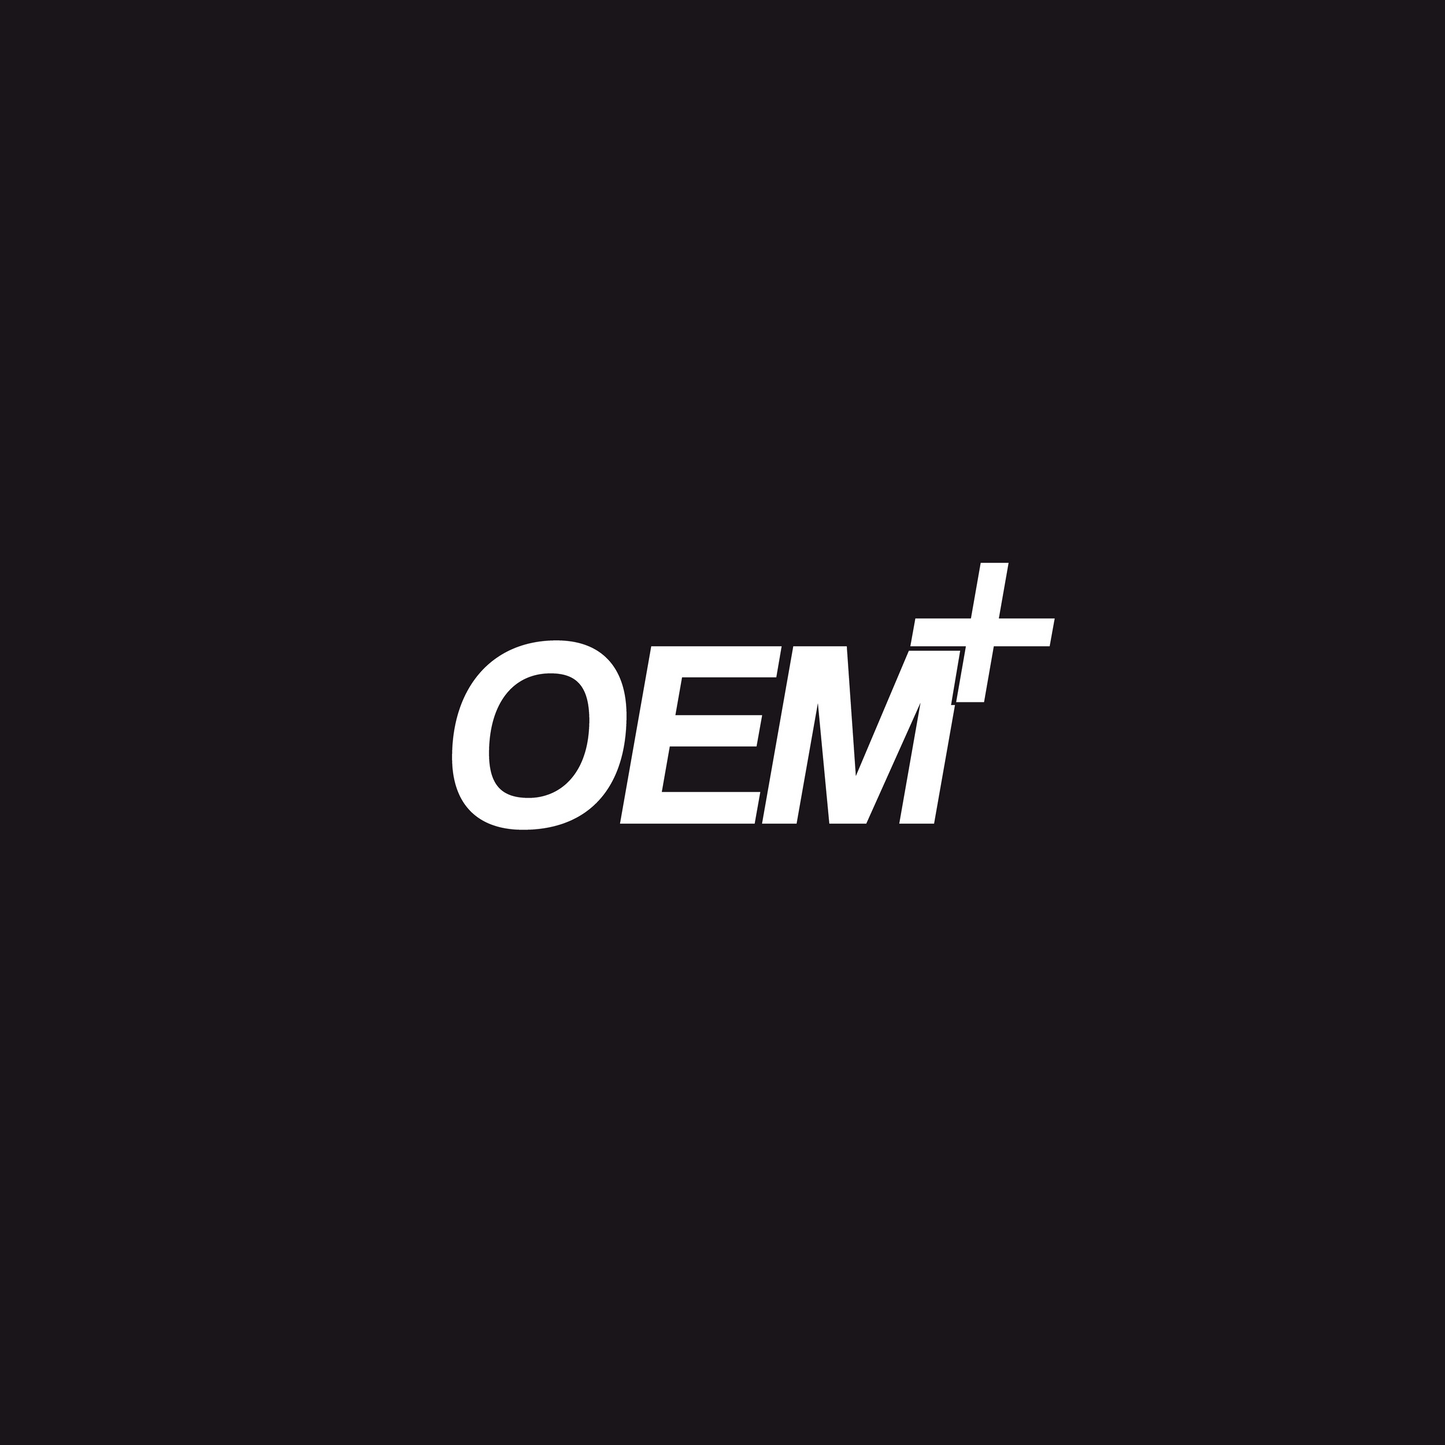 OEM+ Sticker